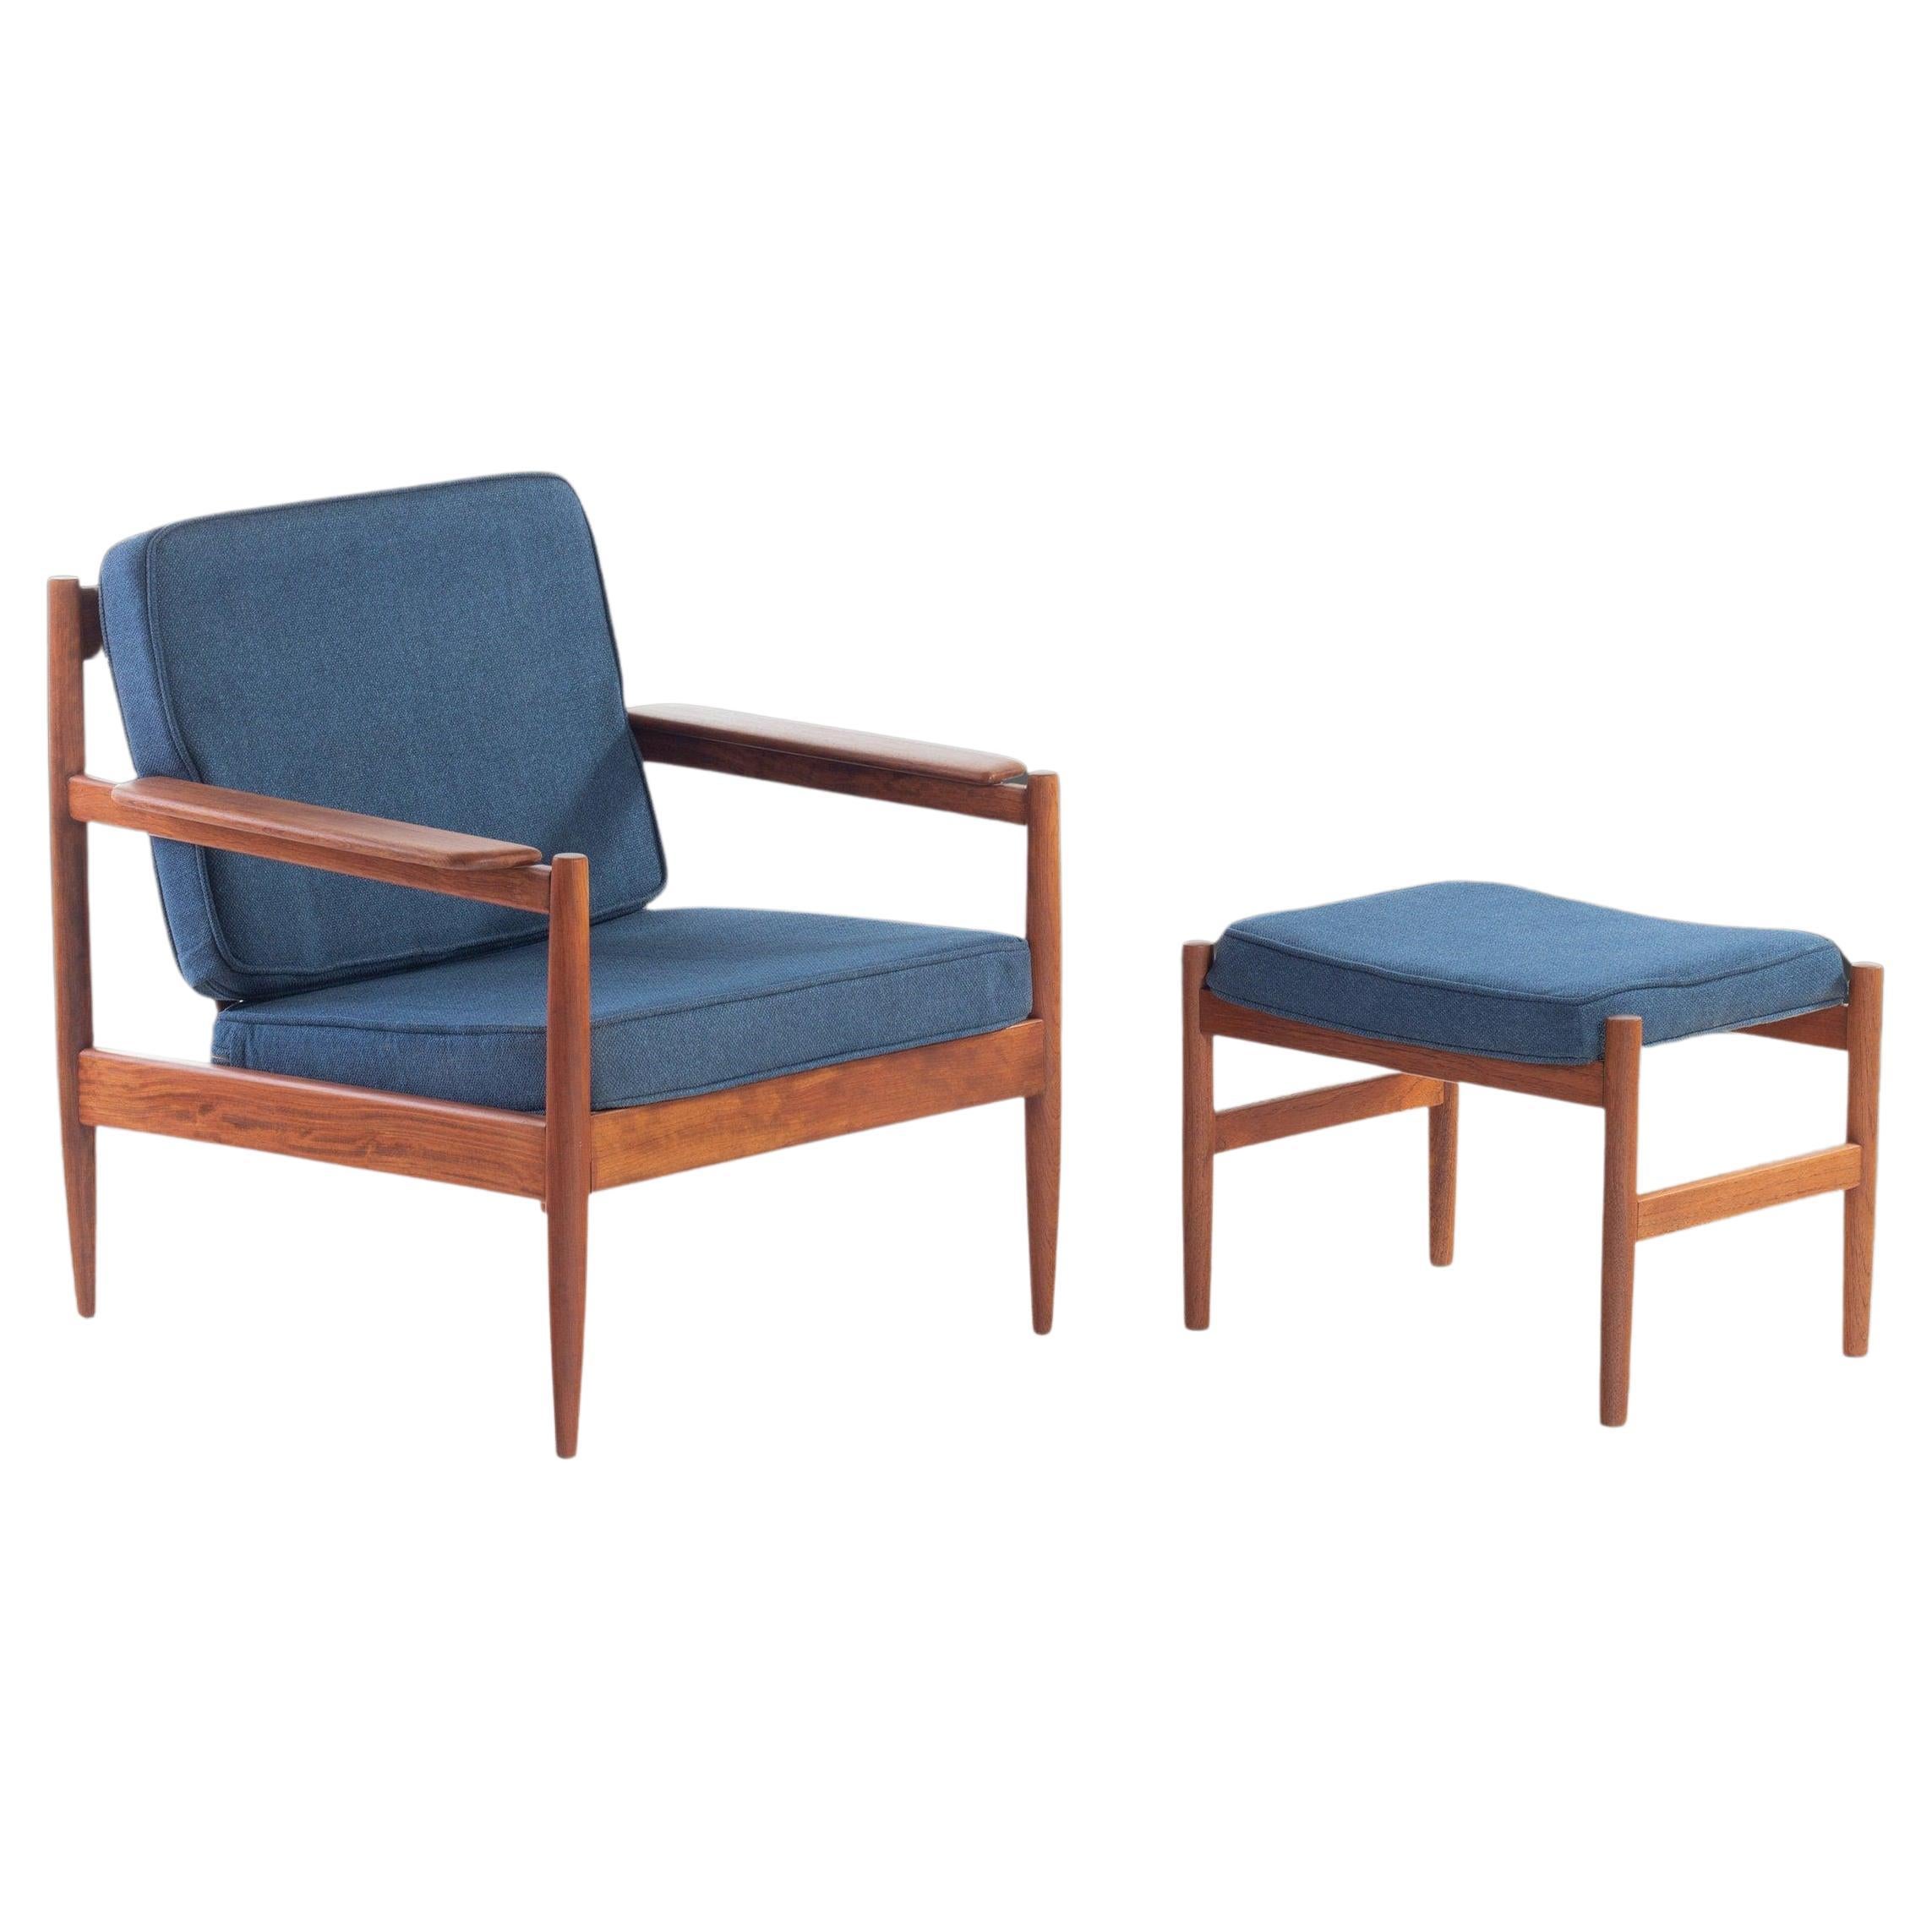 Danish Modern Teak Lounge Chair & Ottoman Attributed to Arne Vodder, c. 1960s For Sale